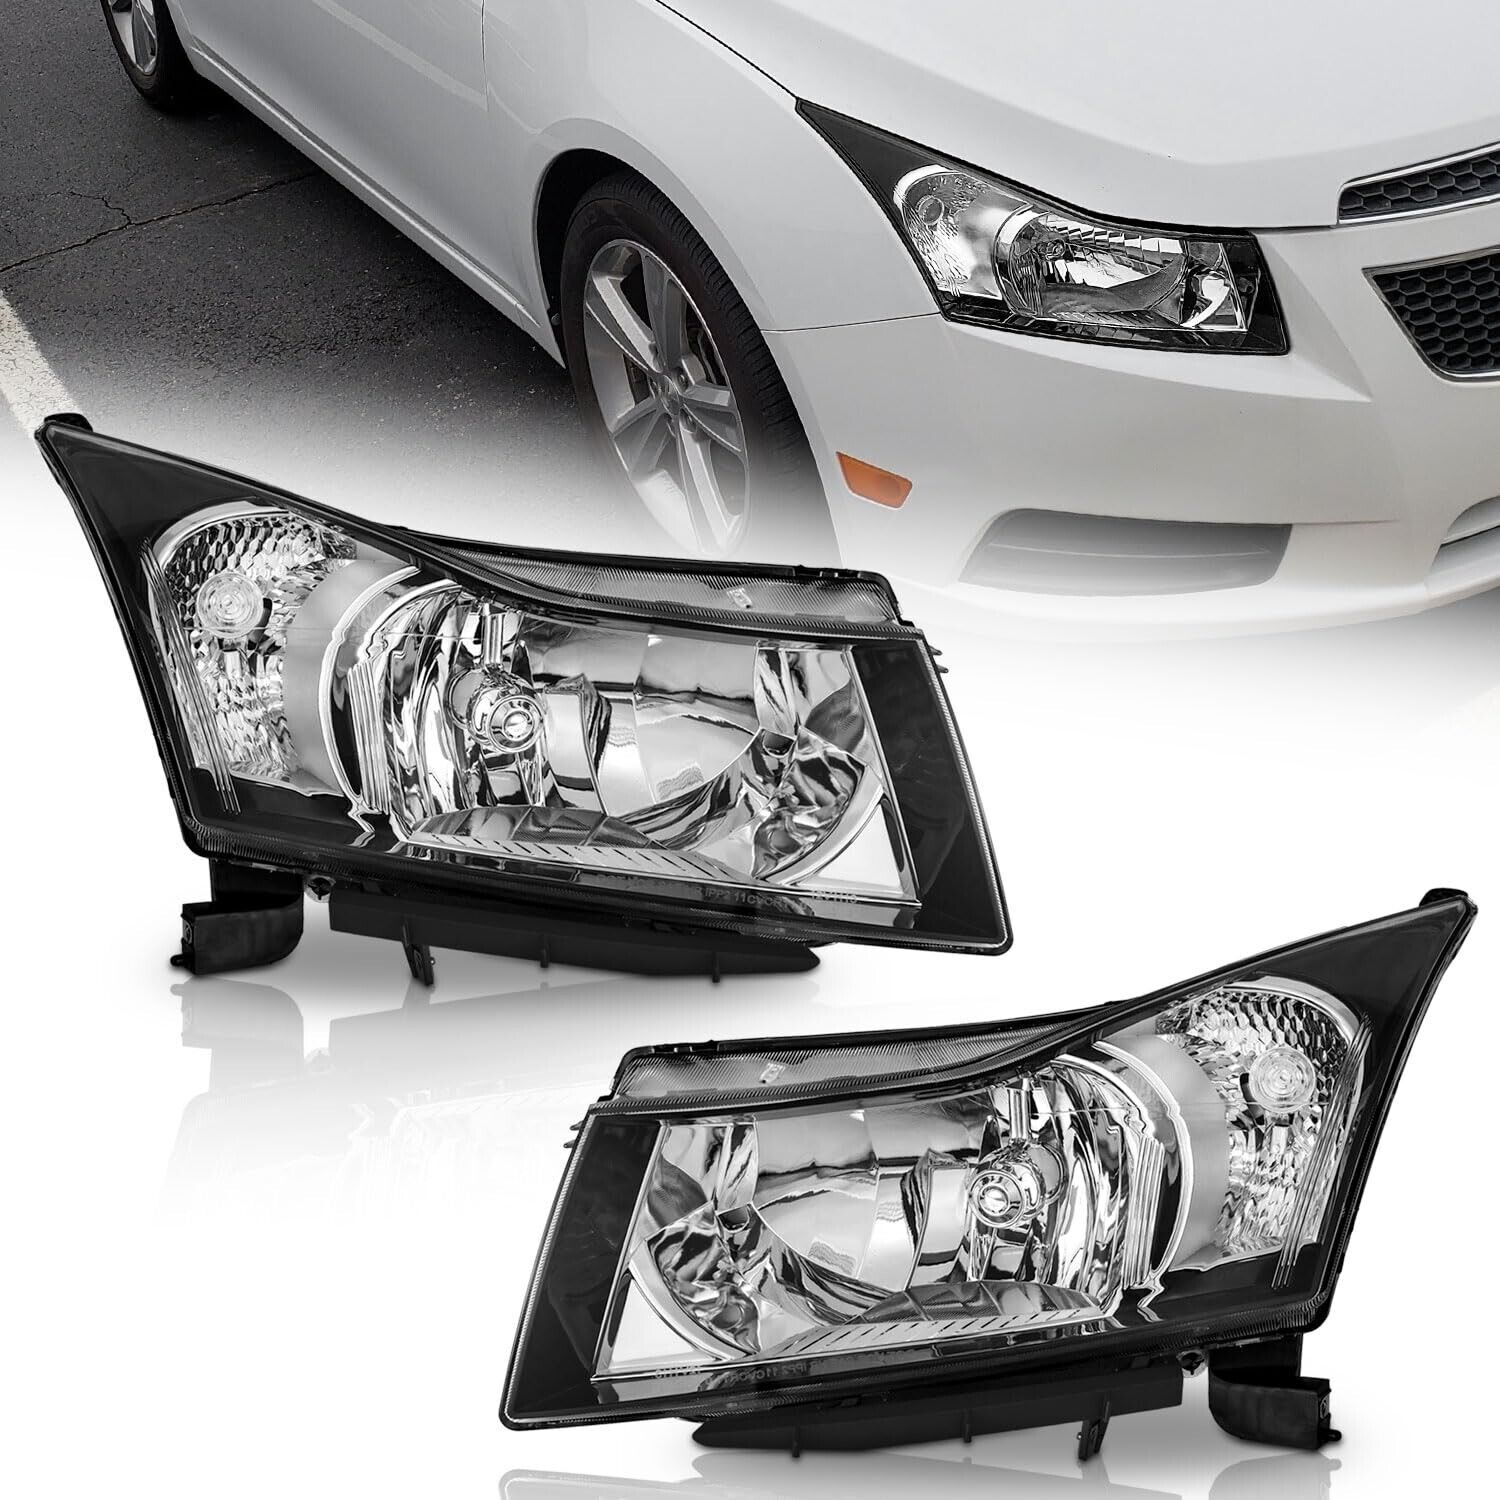 WELMOTO Headlights For 2011-2015 Chevy Cruze Chrome Headlamps Left+Right Pair